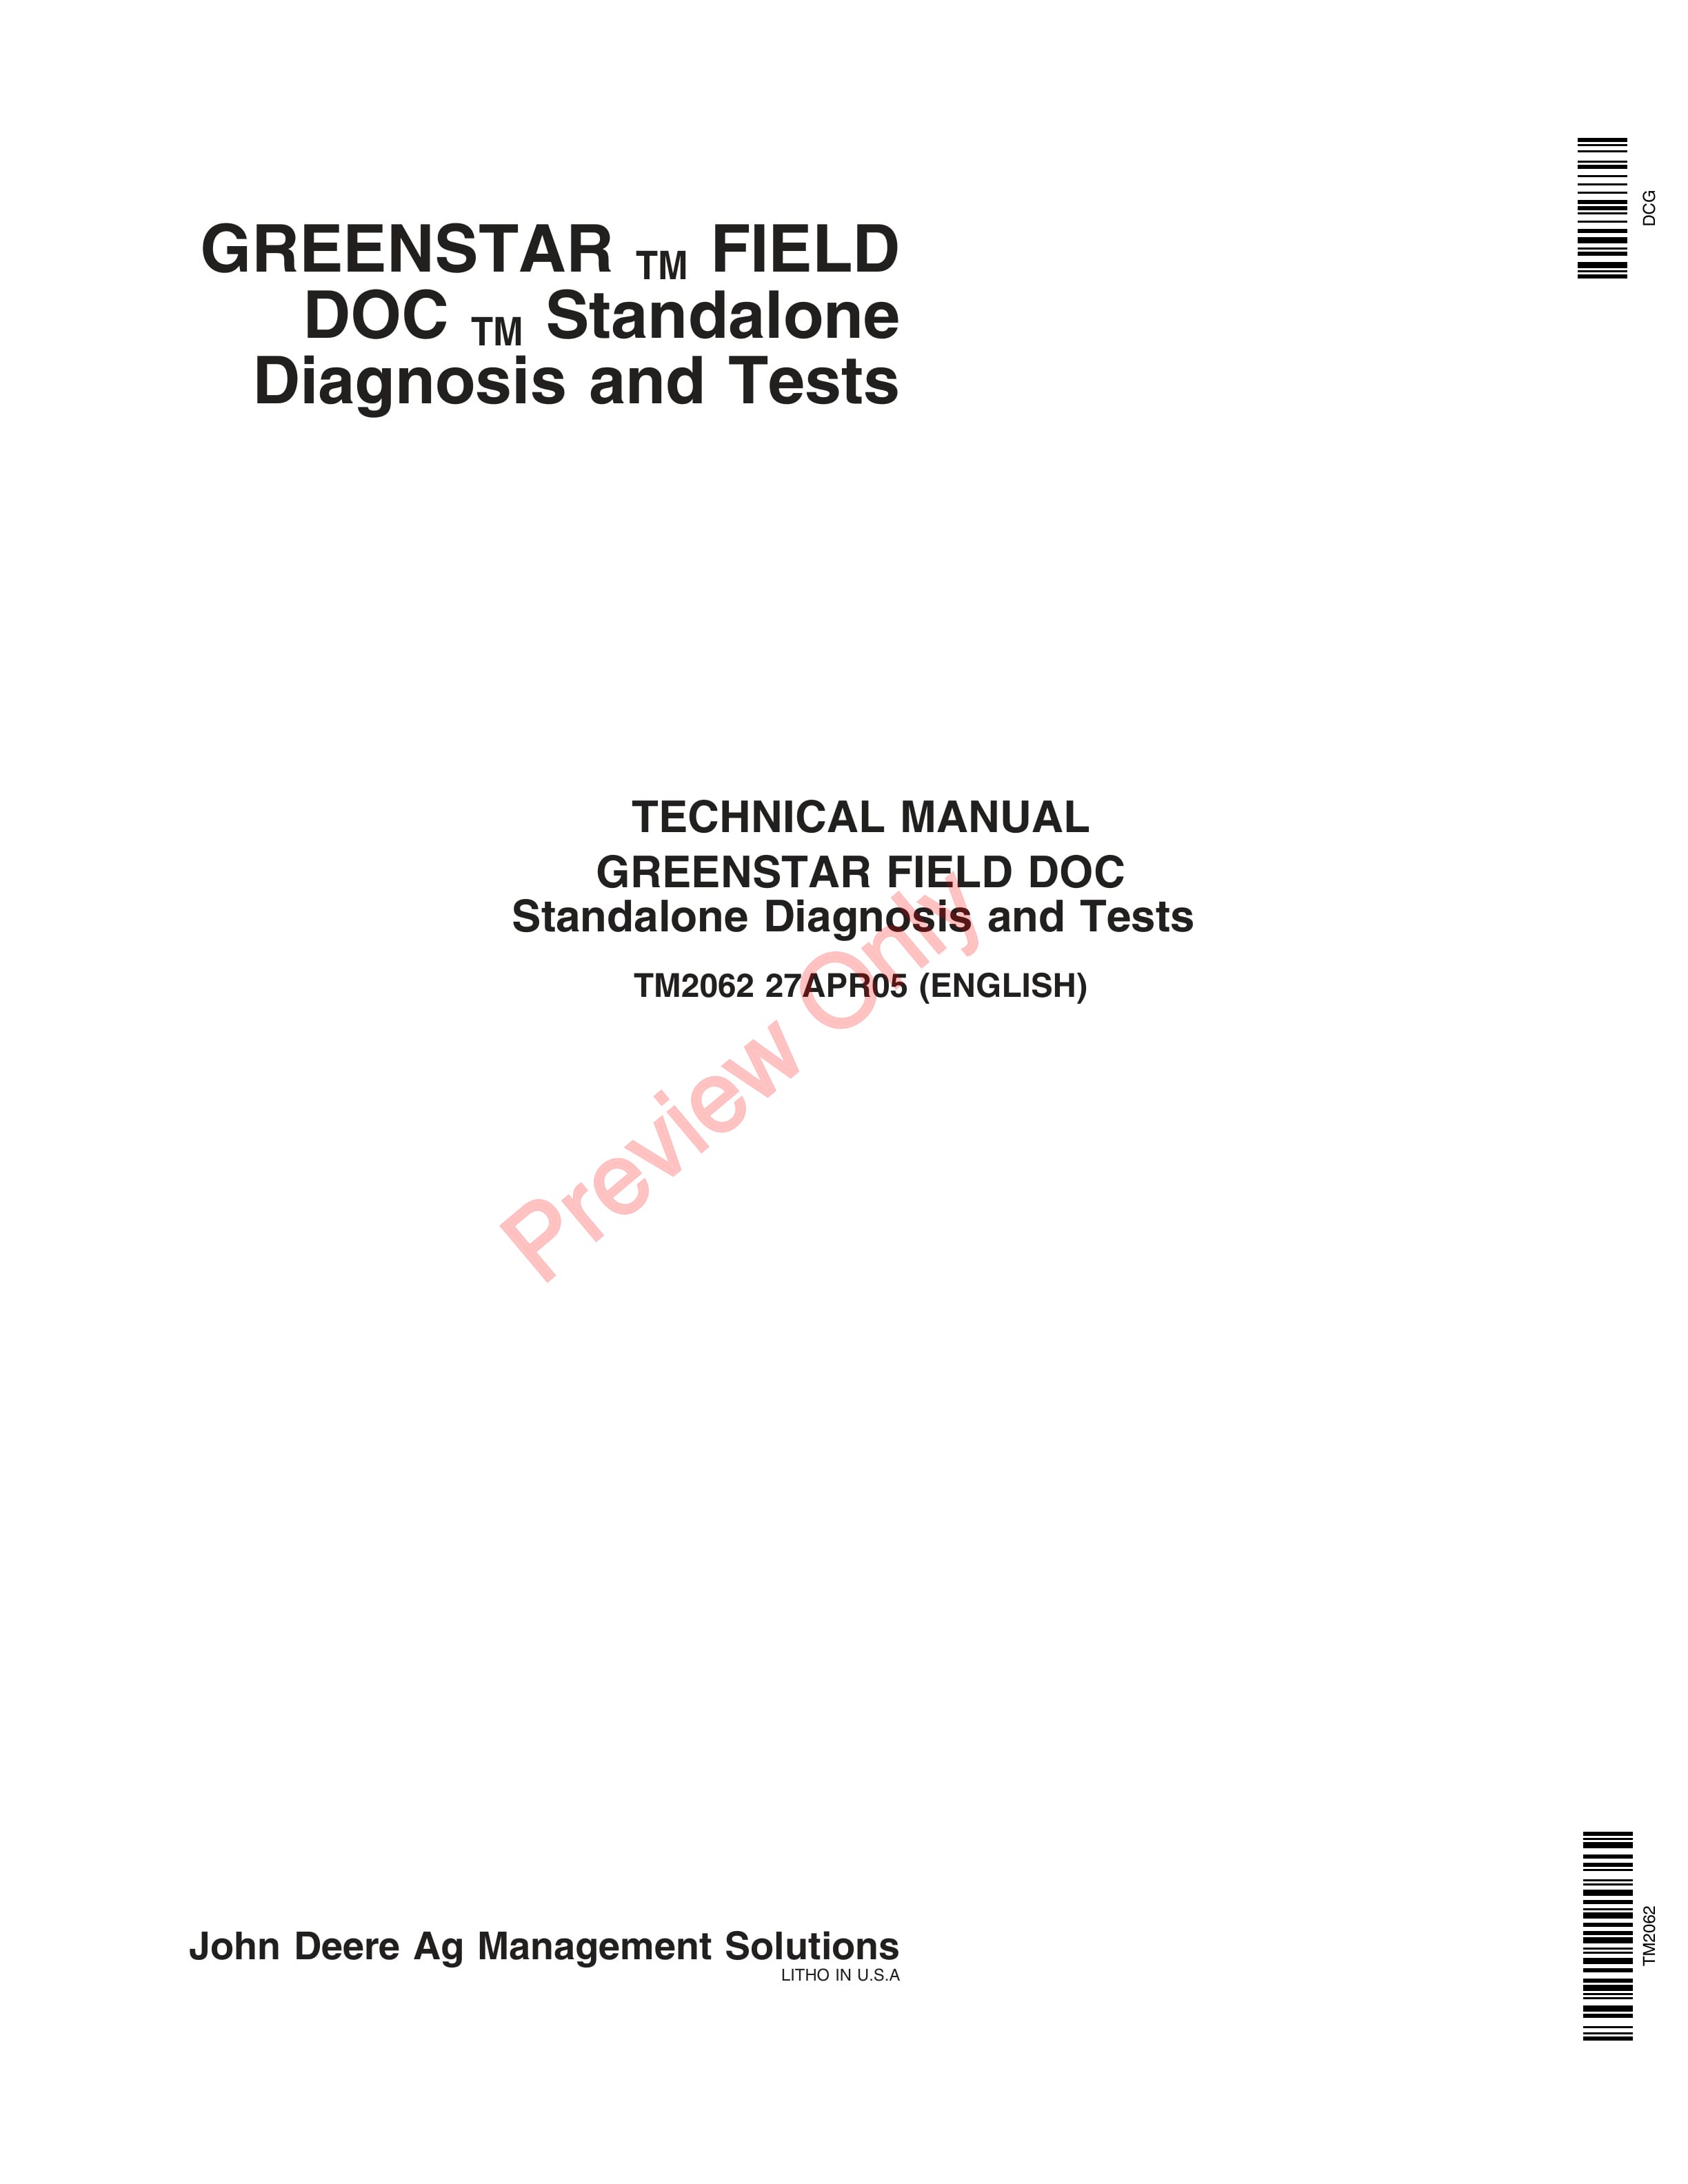 John Deere Greenstar Field Doc StandAlone Technical Manual TM2062 27APR05 1